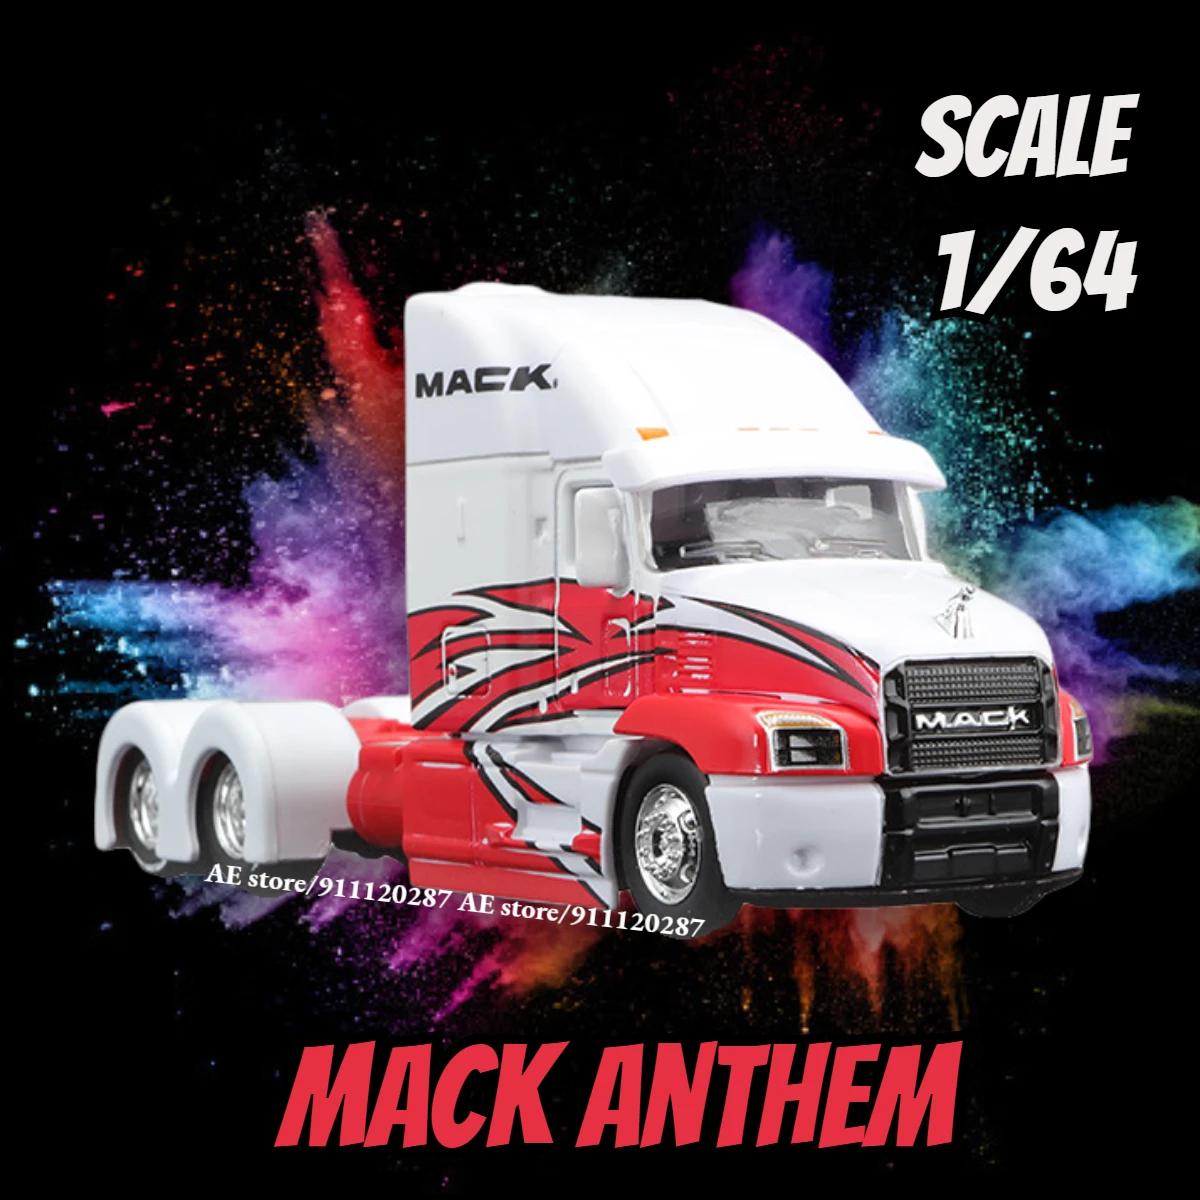 

Maisto 1/64 Mini Trailer Car Model Miniature, MACK Anthem White Scale Truck Vehicle Art Diecast Replica Collection Toy